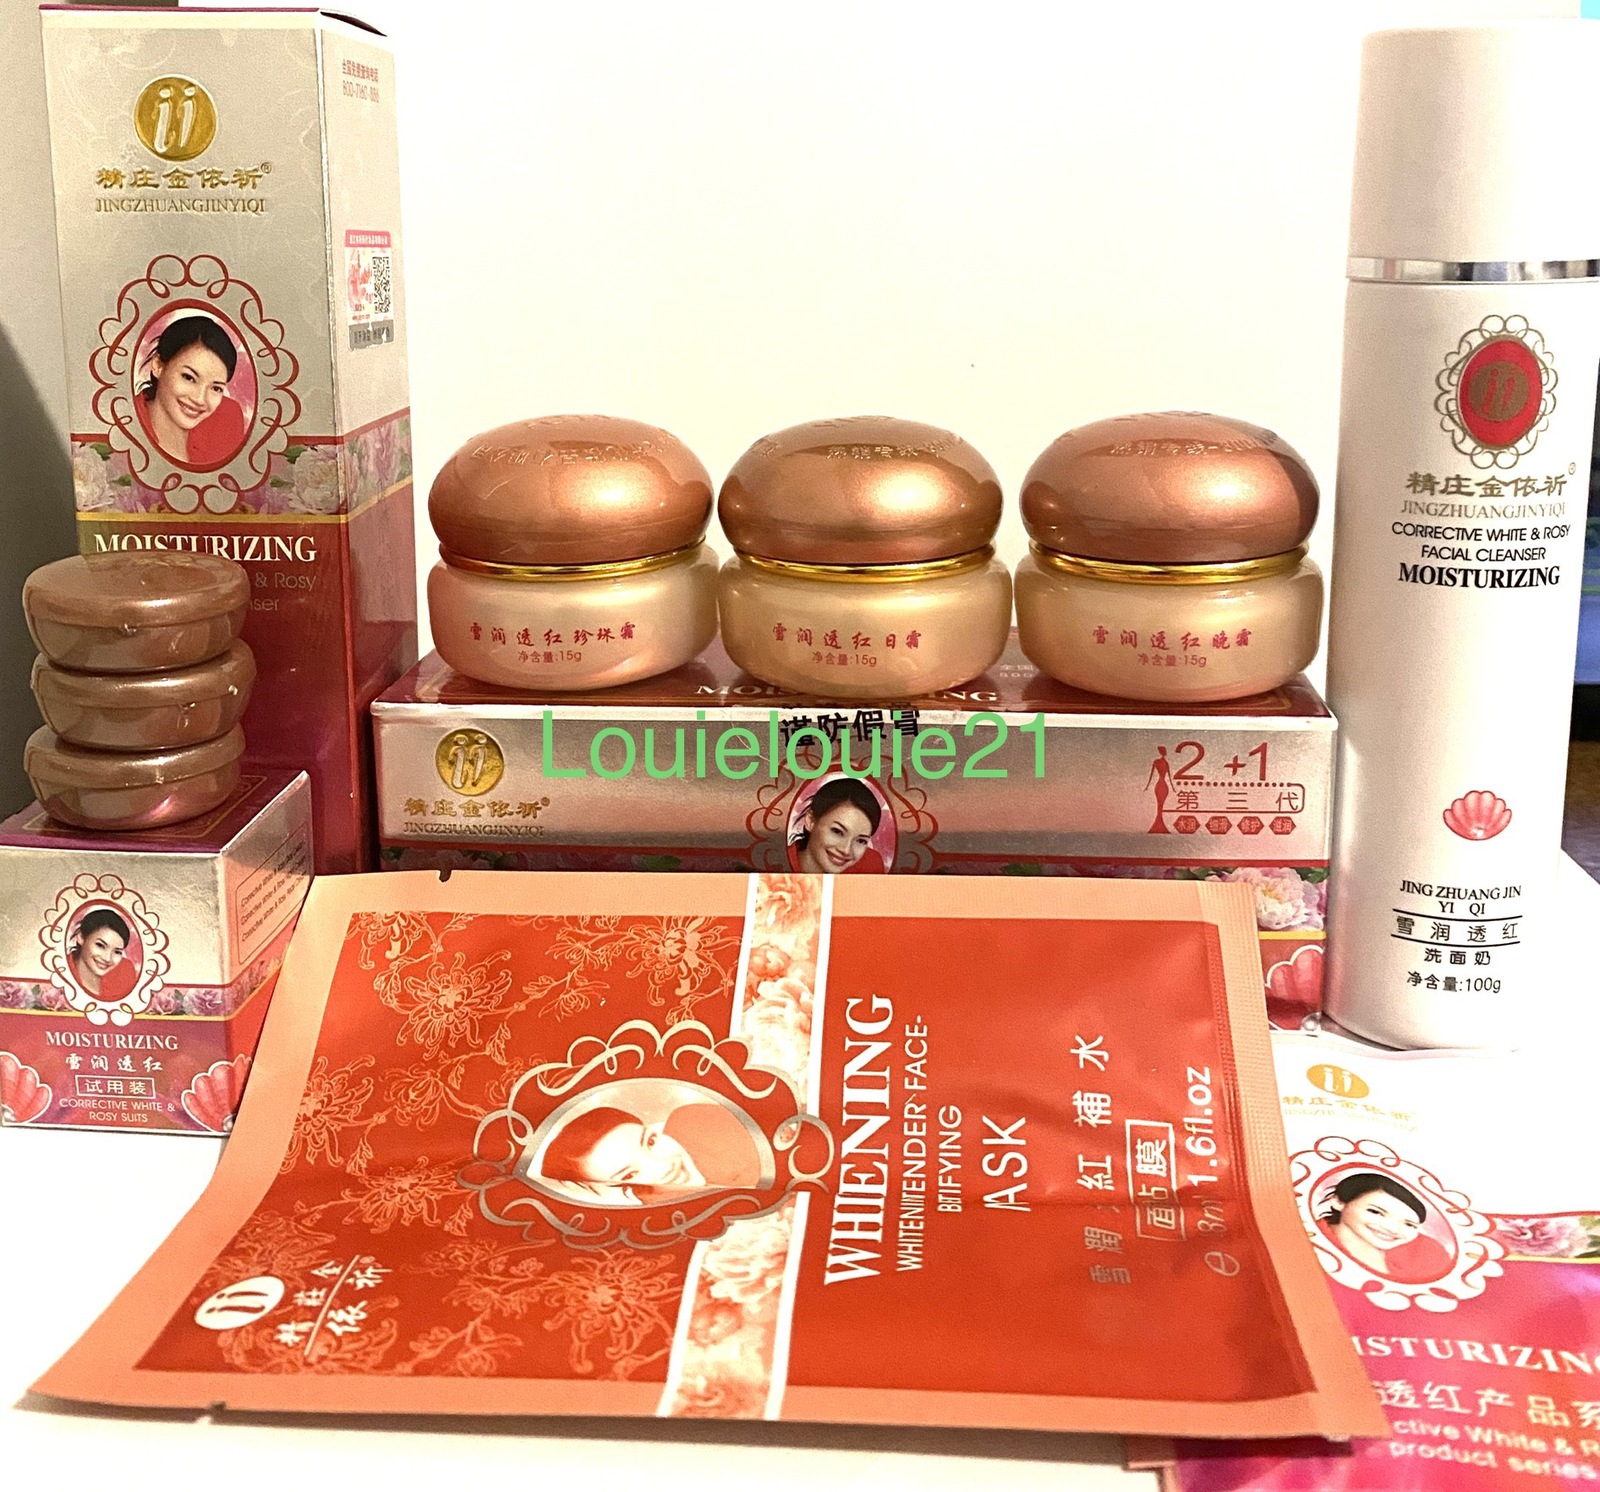 Original YiQi beauty whitening cream 2+1 effective in 7day (5 sets). - $200.00